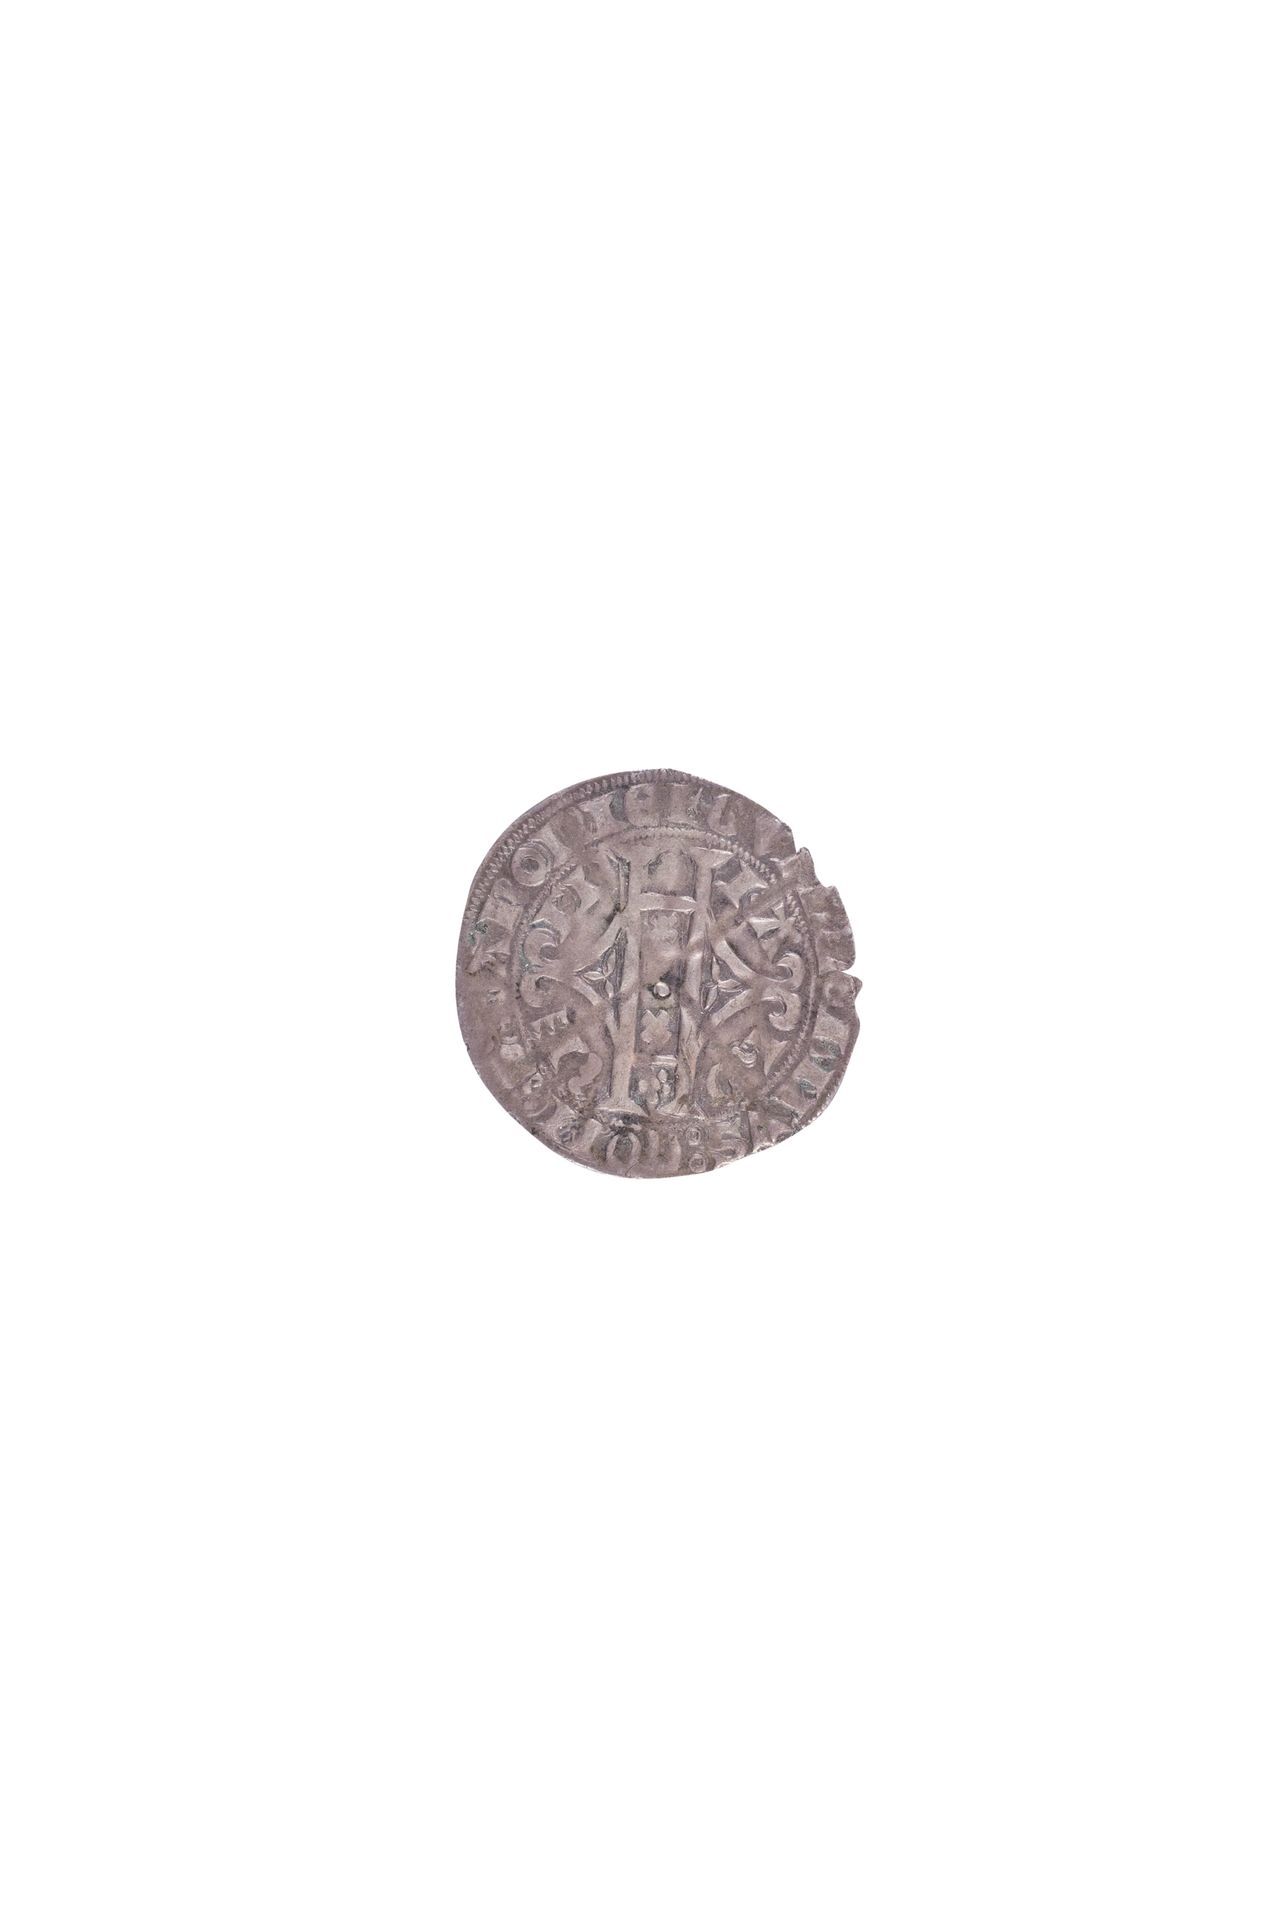 Null 巴伐利亚的威廉三世1356-1389年在海诺特郡的双戈瓦伦西恩银。

Ch. 101 var.罕见的TTB